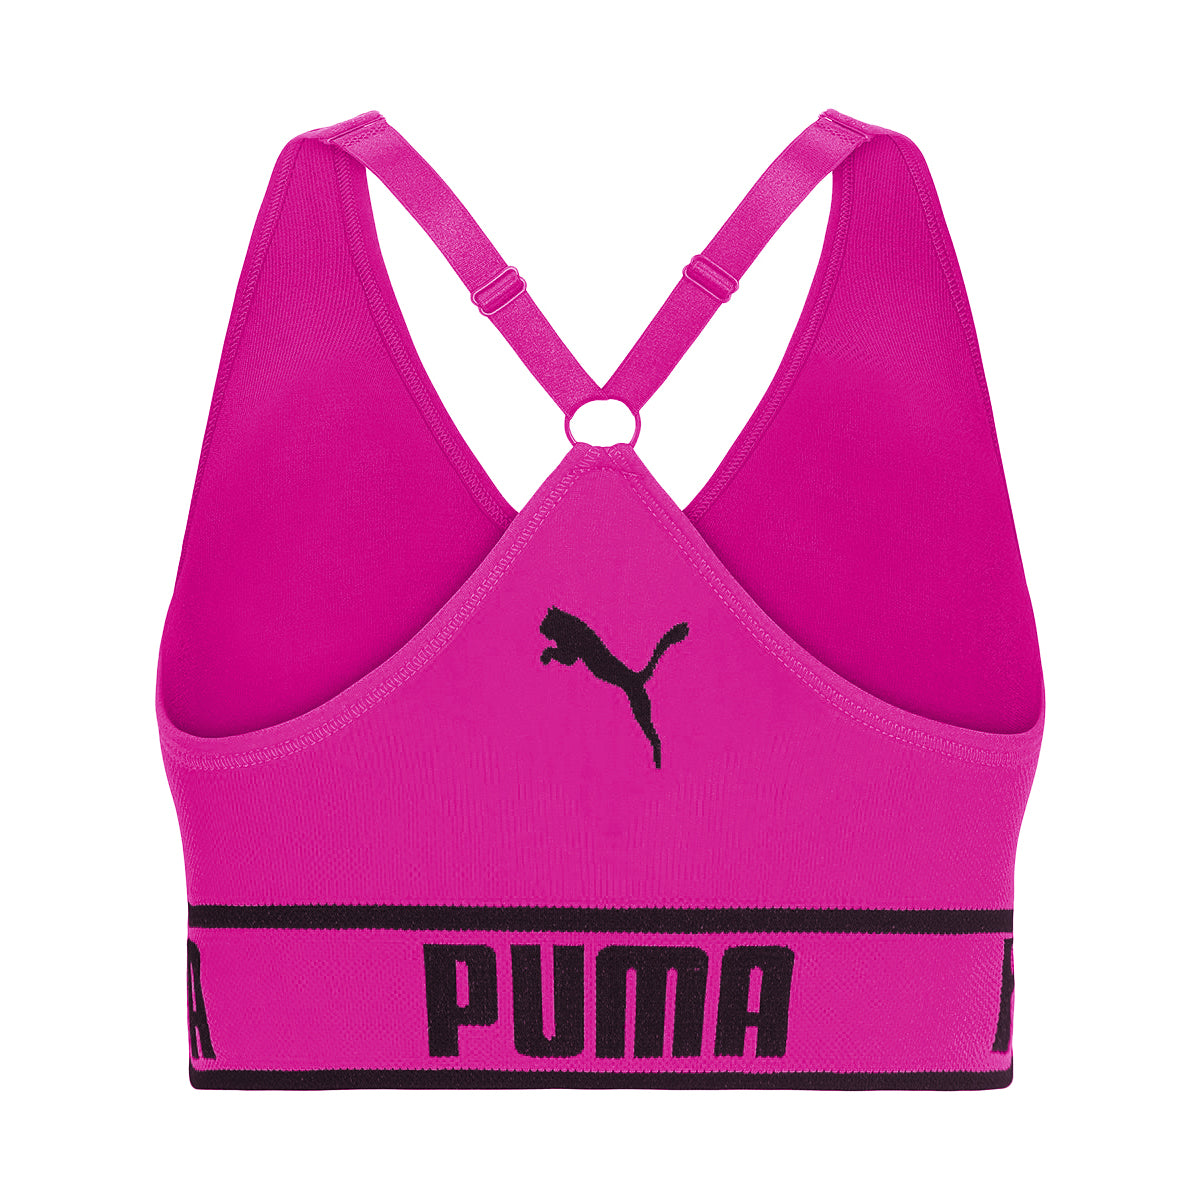 New PUMA Women's Solstice Seamless Sports Bra black color large size